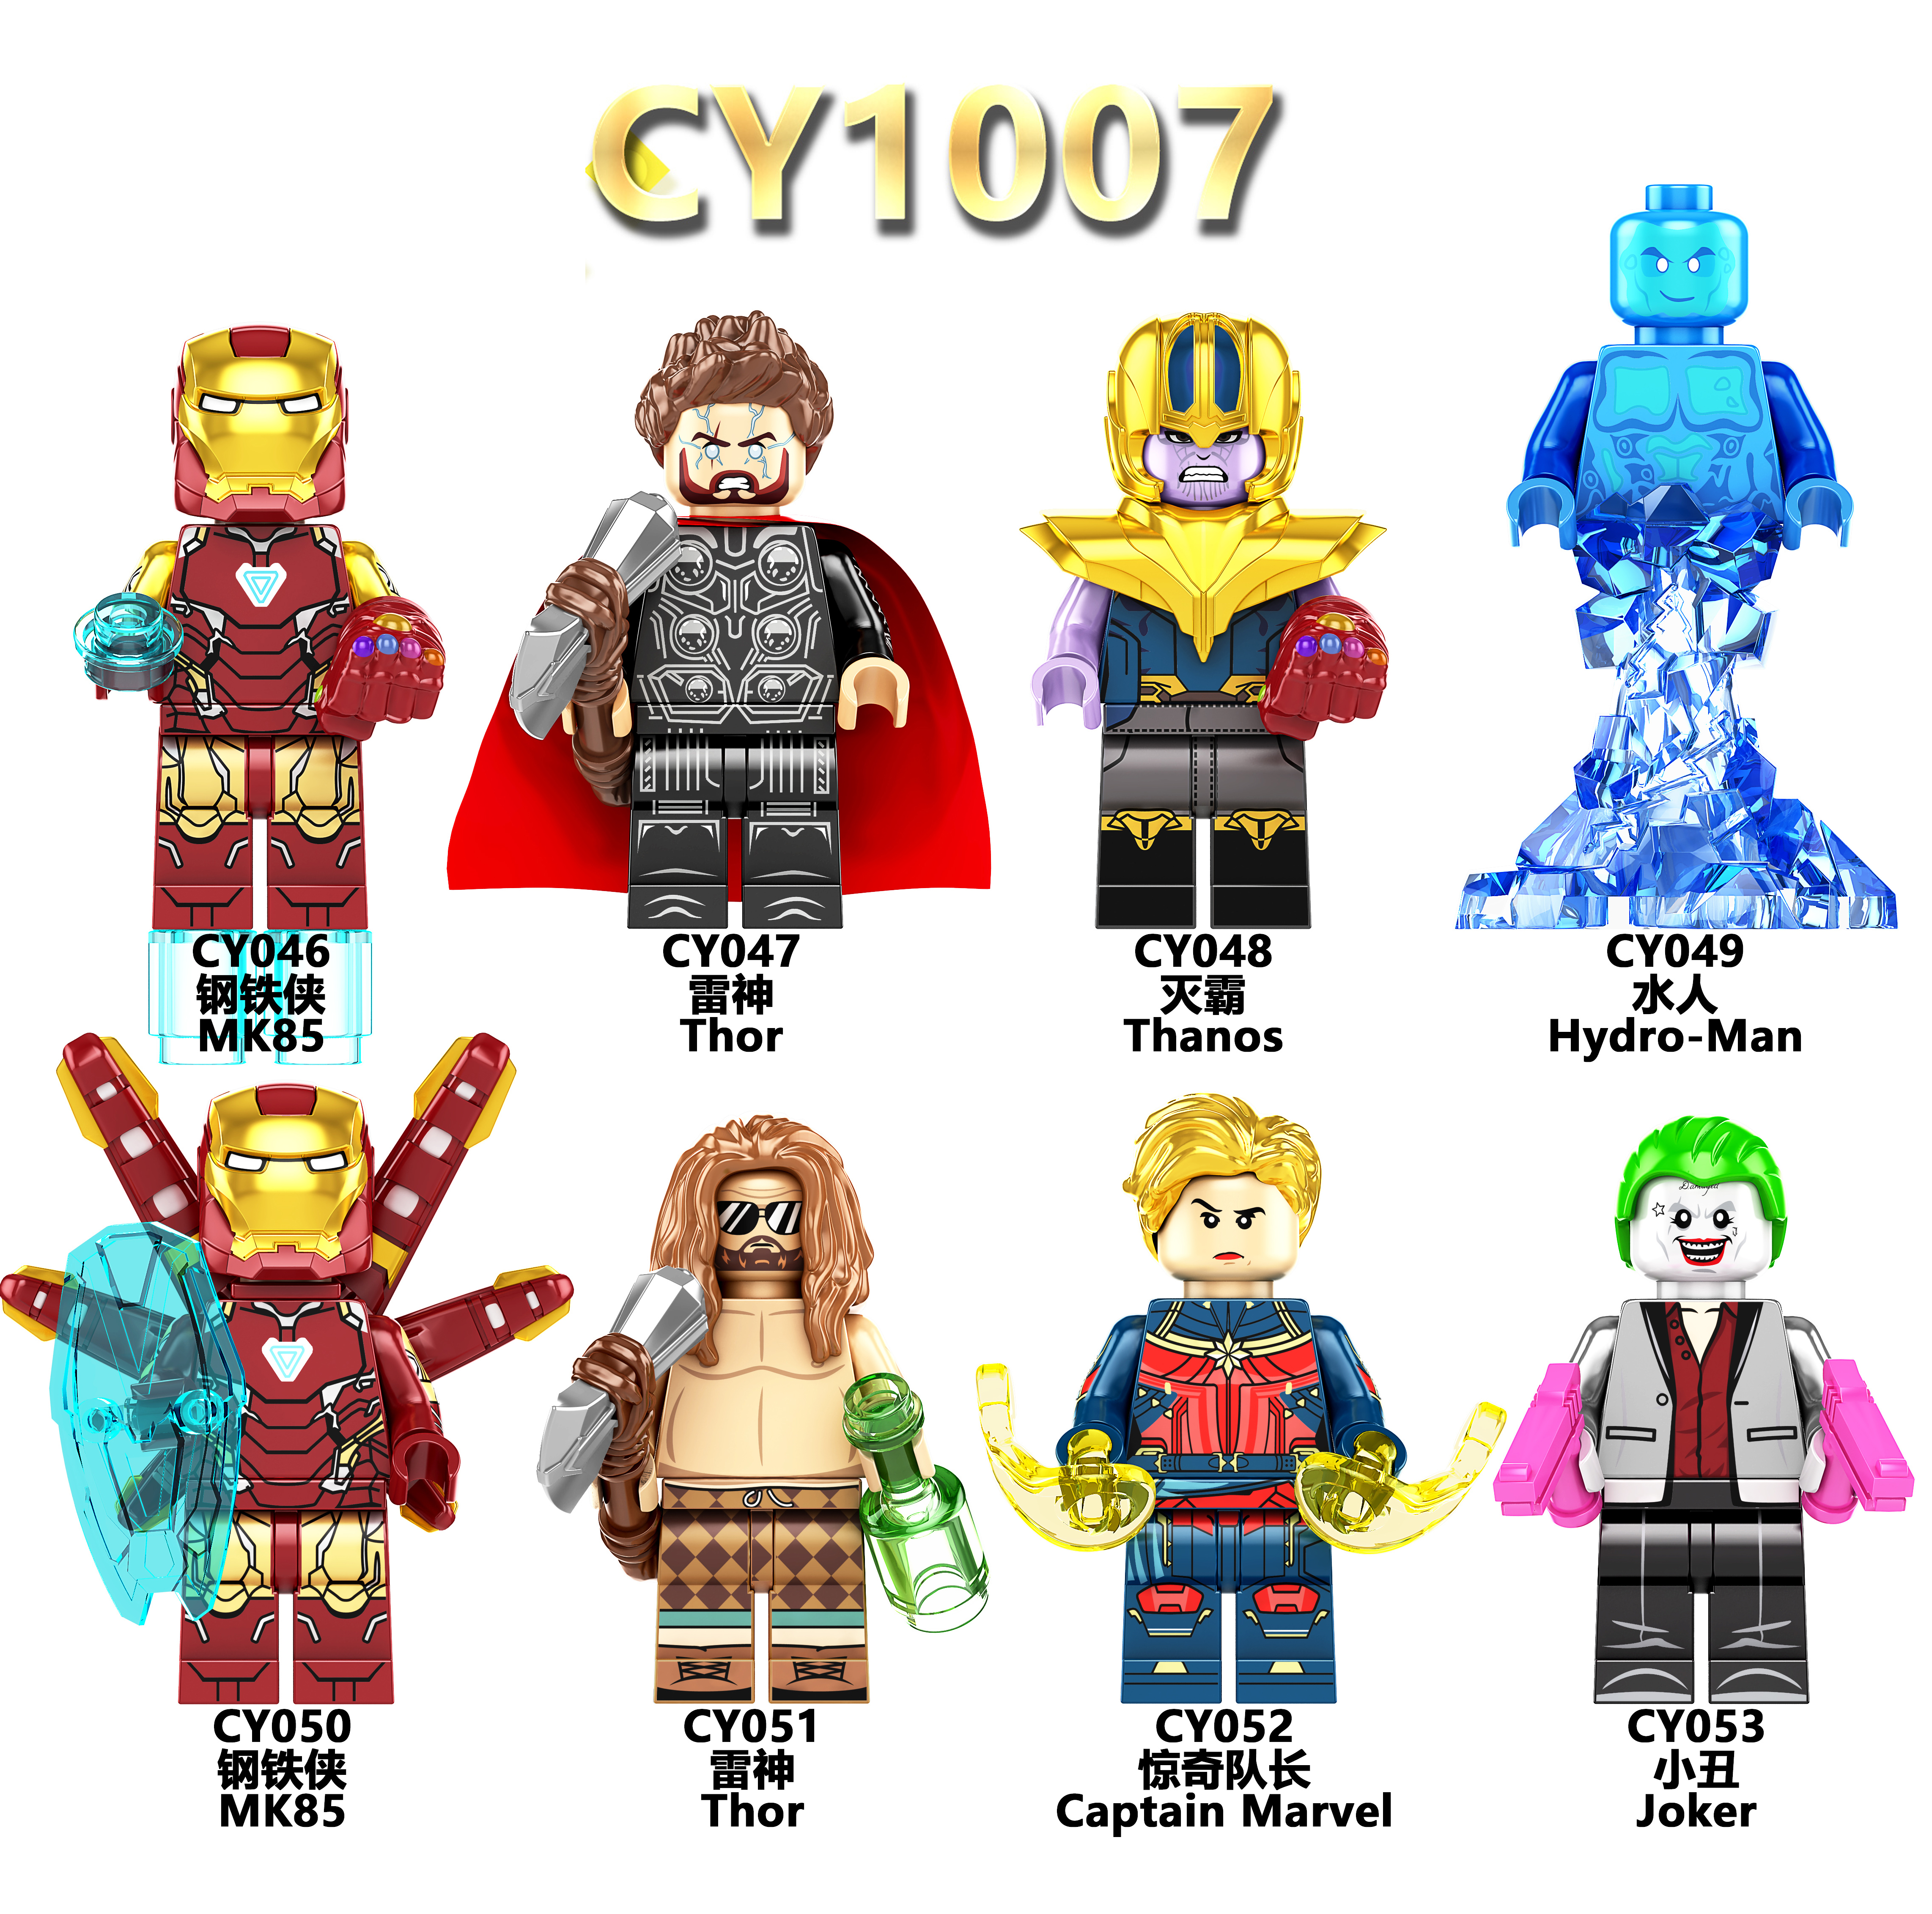 CY1007 CY046 CY047 CY048 CY049 CY050 CY051 CY052 CY053 Super Heroes Building Blocks Bricks Ironman MK85 Thor Thanos Joker Captain Marvel Hydro-Man Action Figures Educational Toys For Kids Gifts